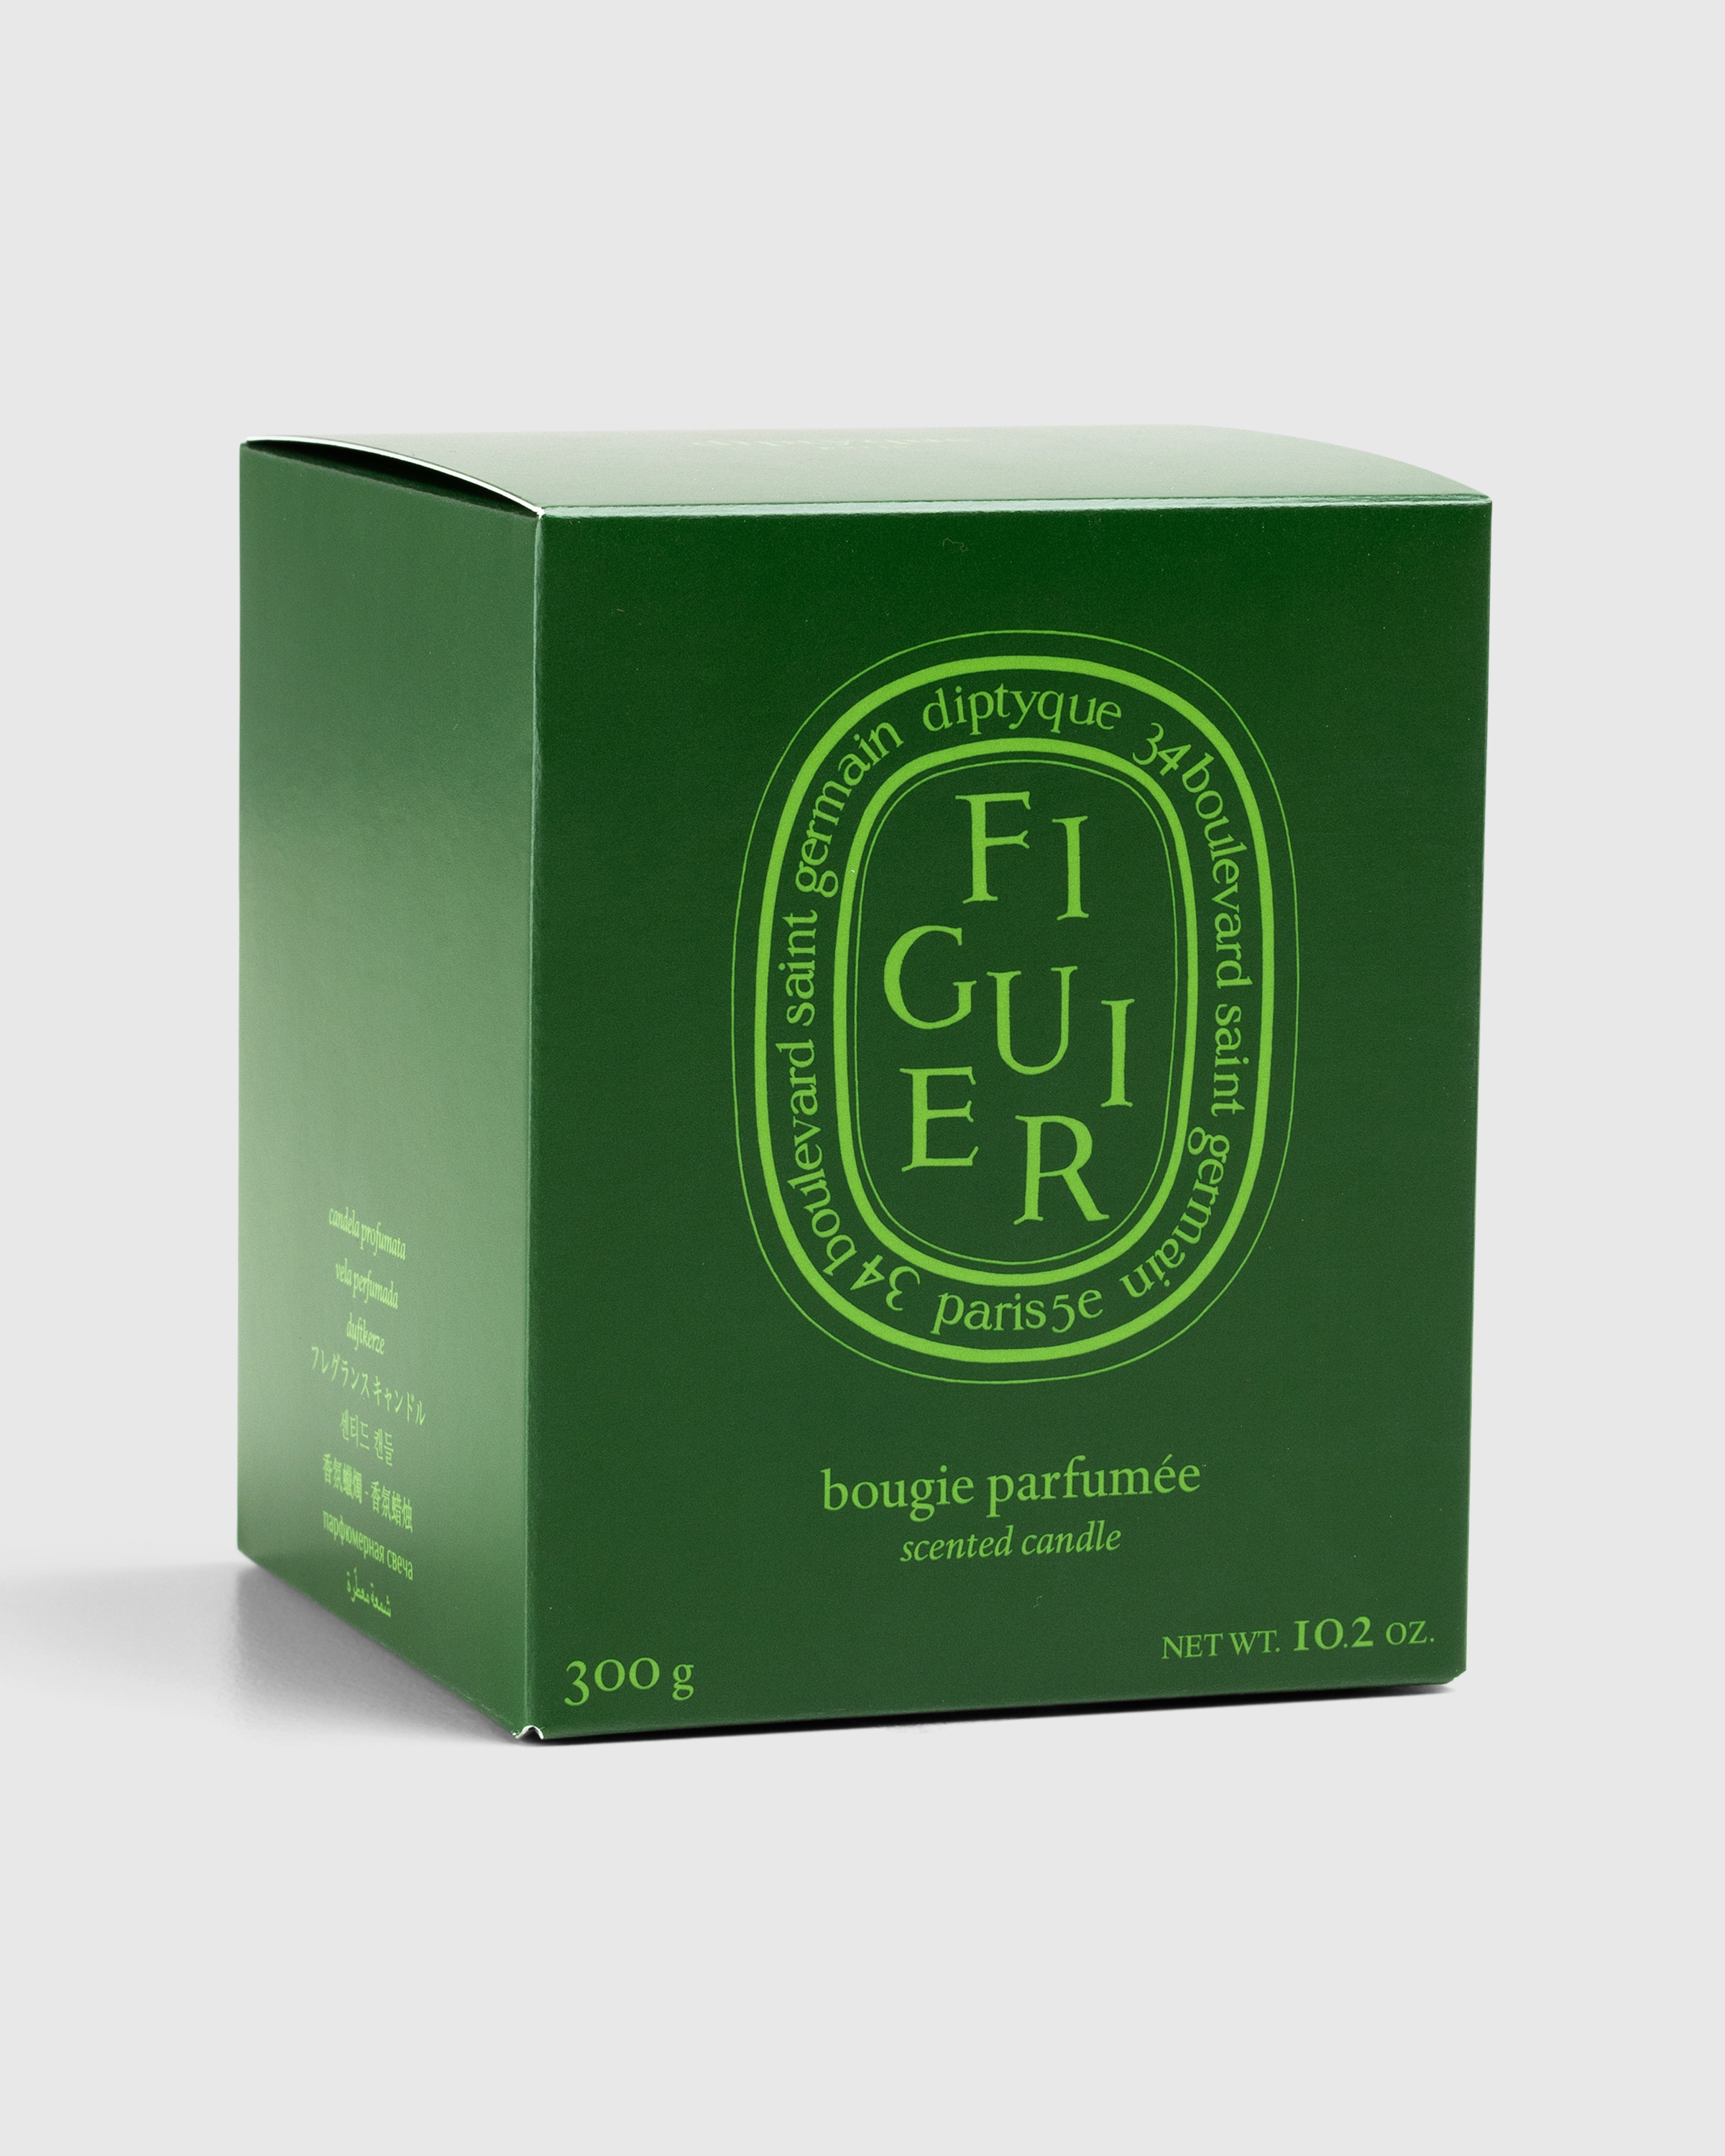 Diptyque – Green Candle Figuier 300g - Candles & Fragrances - Transparent - Image 3